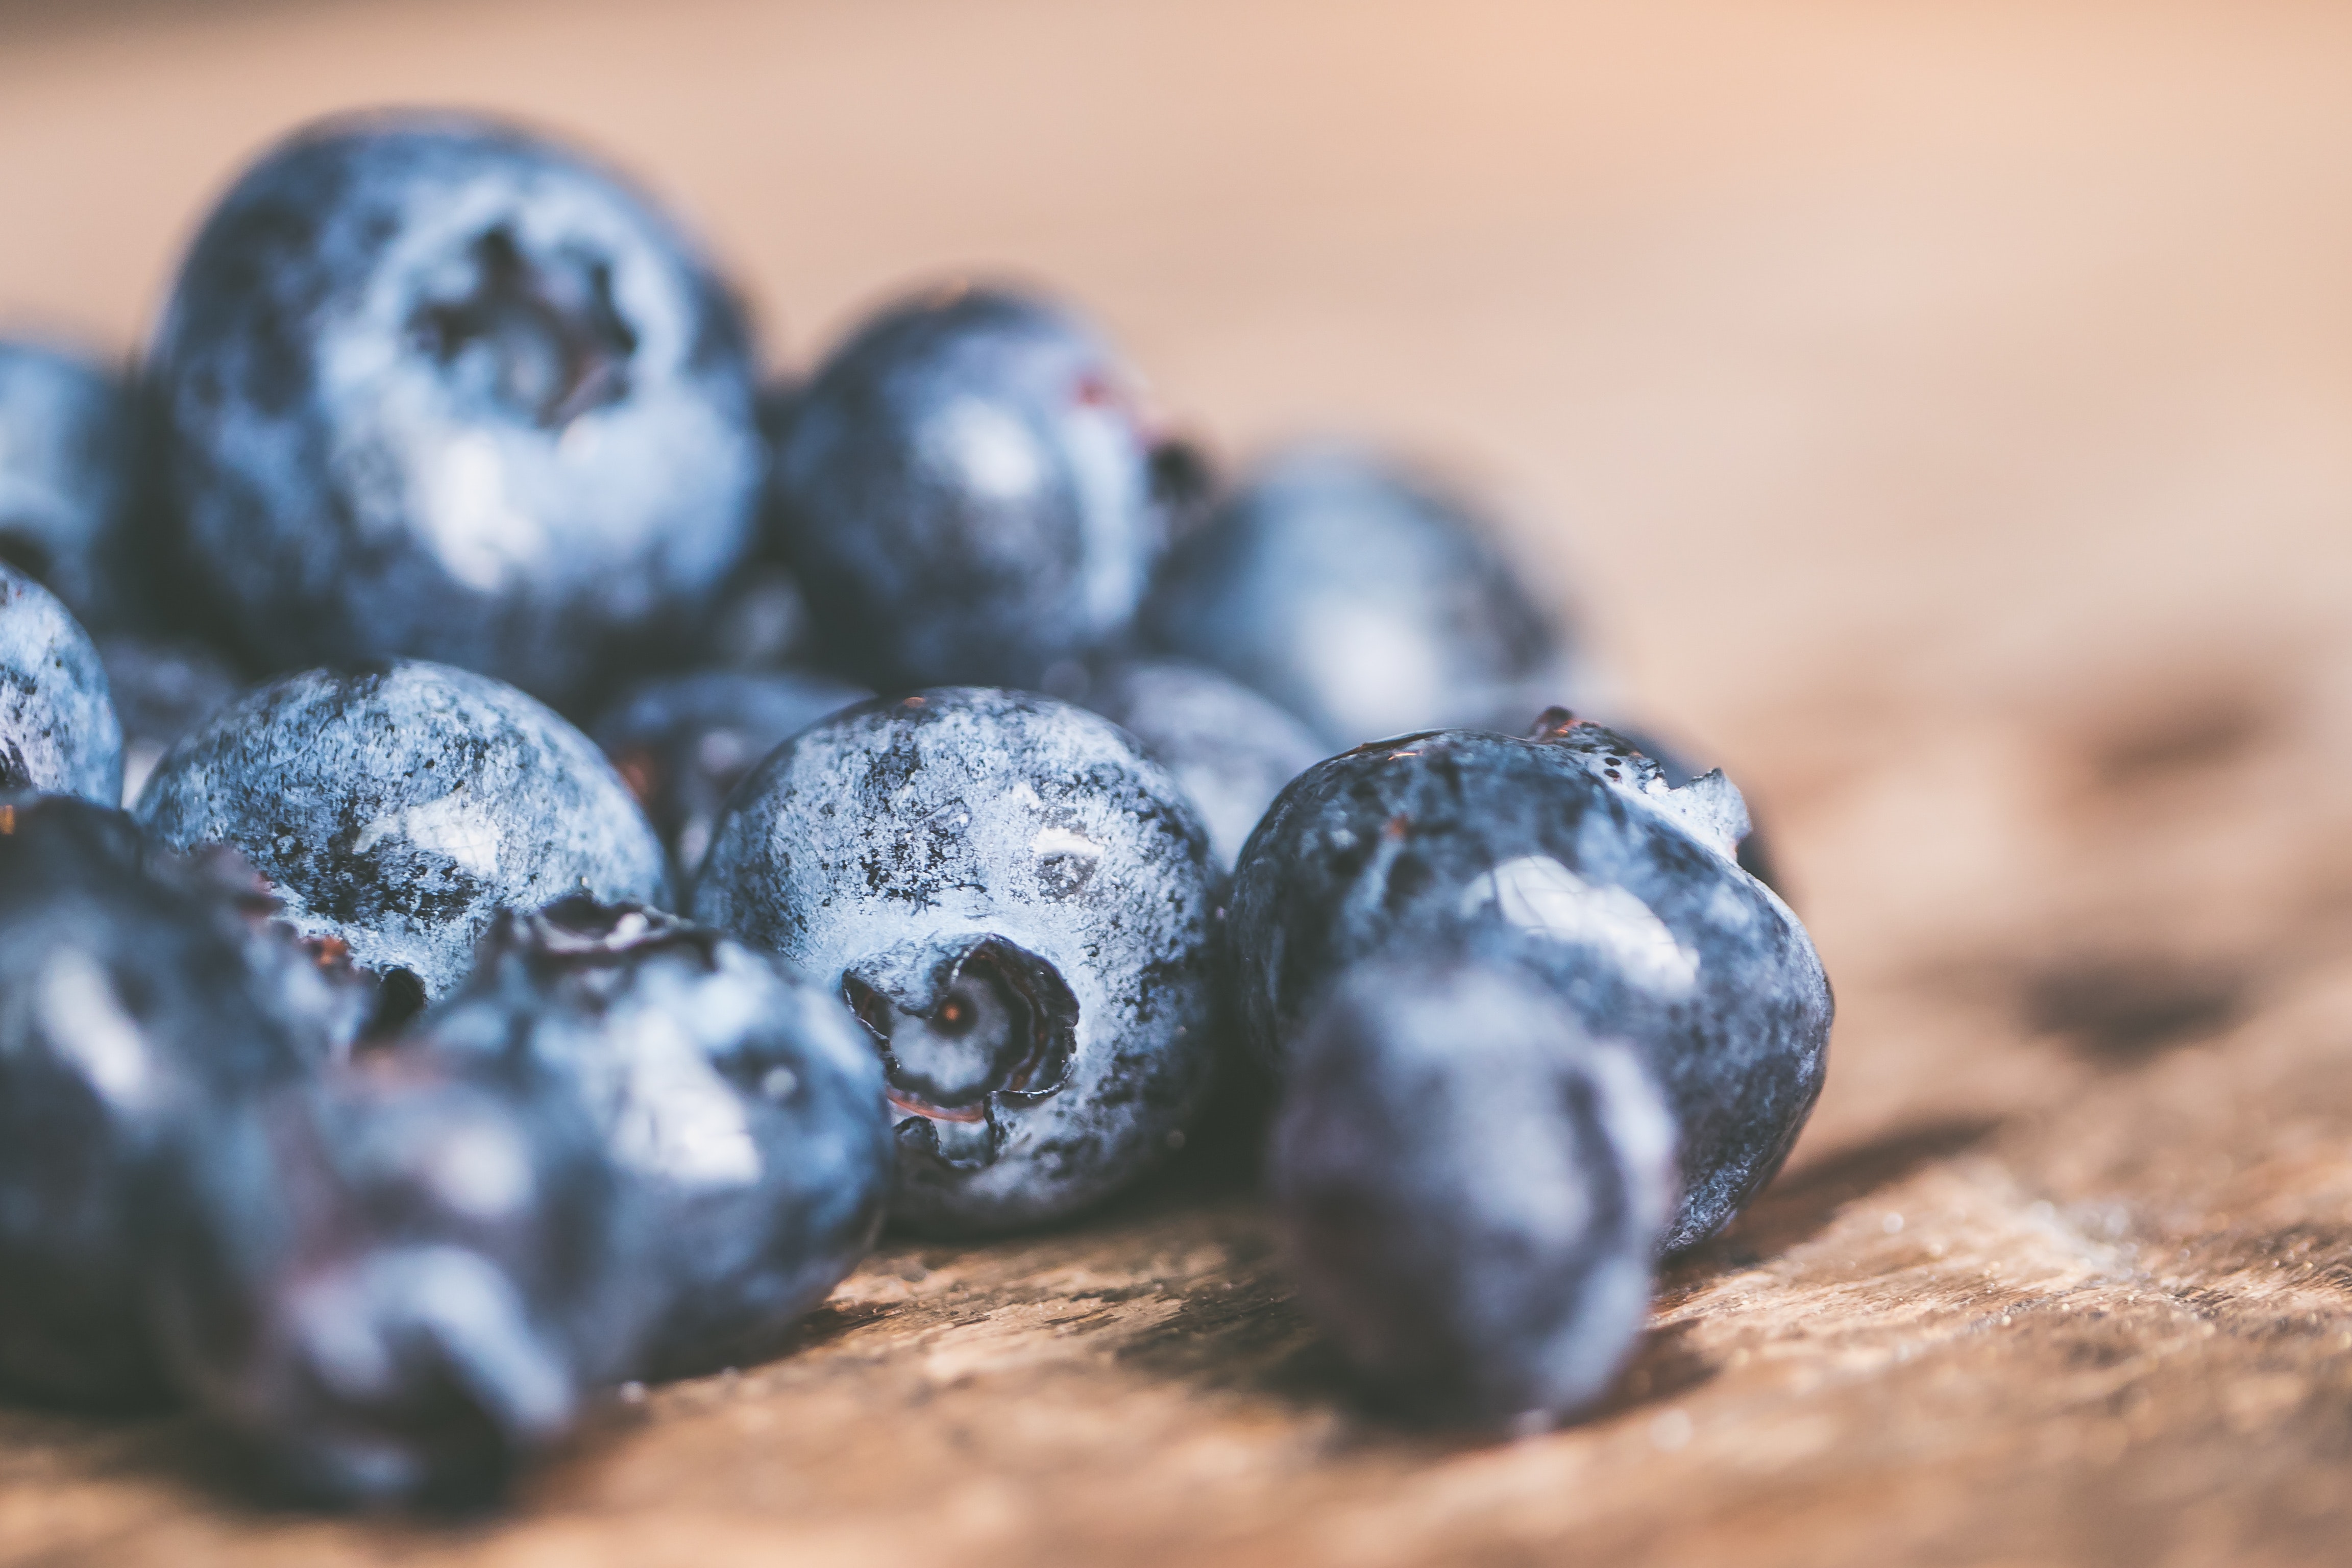 100+ Amazing Blueberry Photos · Pexels · Free Stock Photos